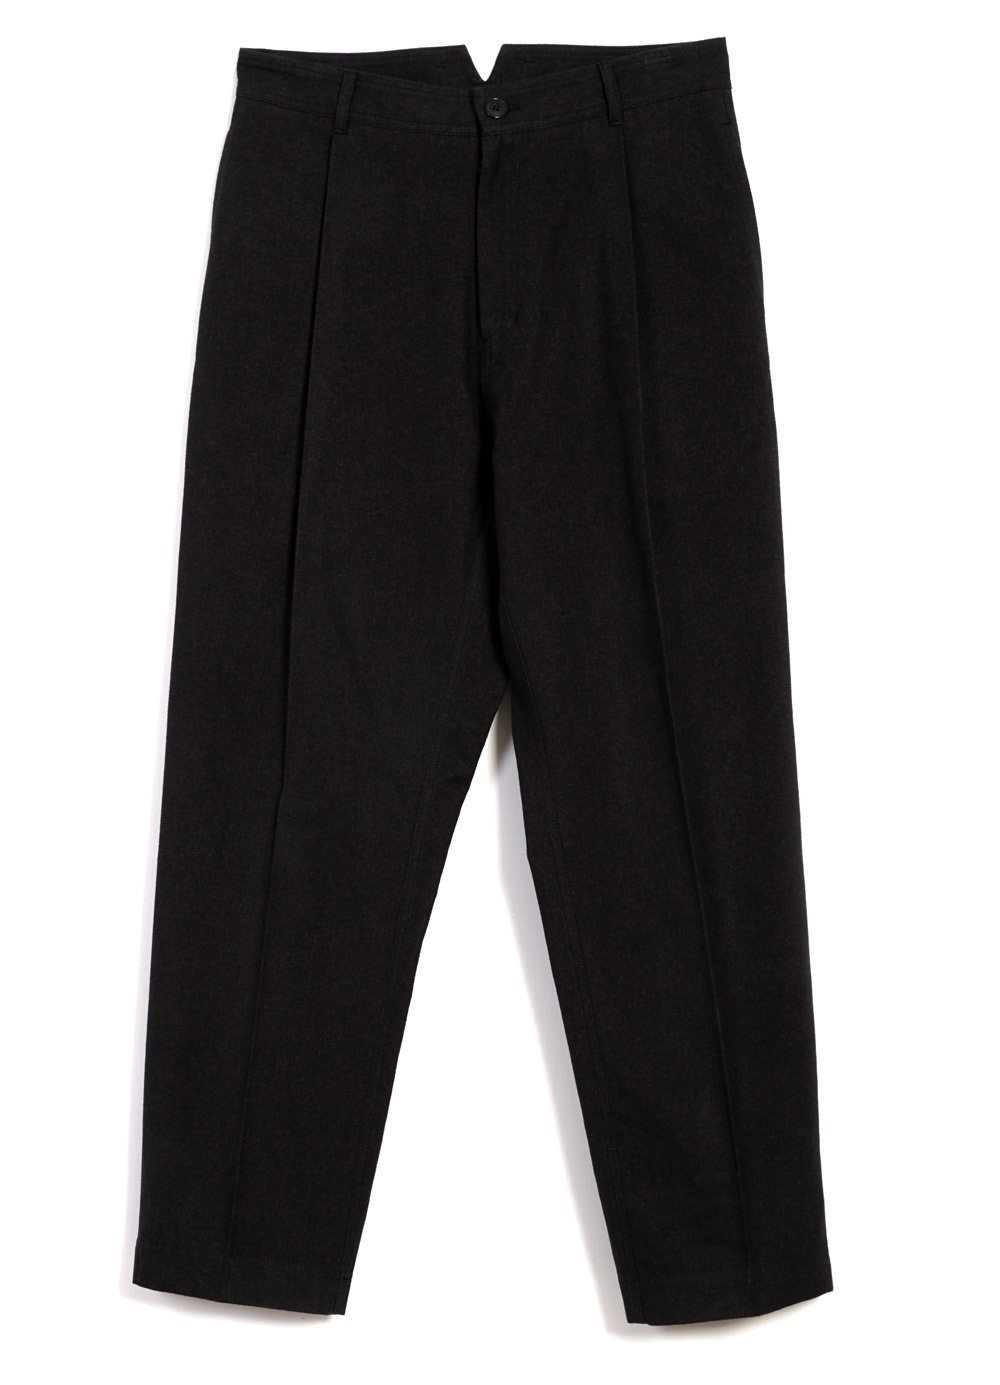 HANSEN Garments - EIGIL | Wide Cut Pleated Trousers | Nero - HANSEN Garments